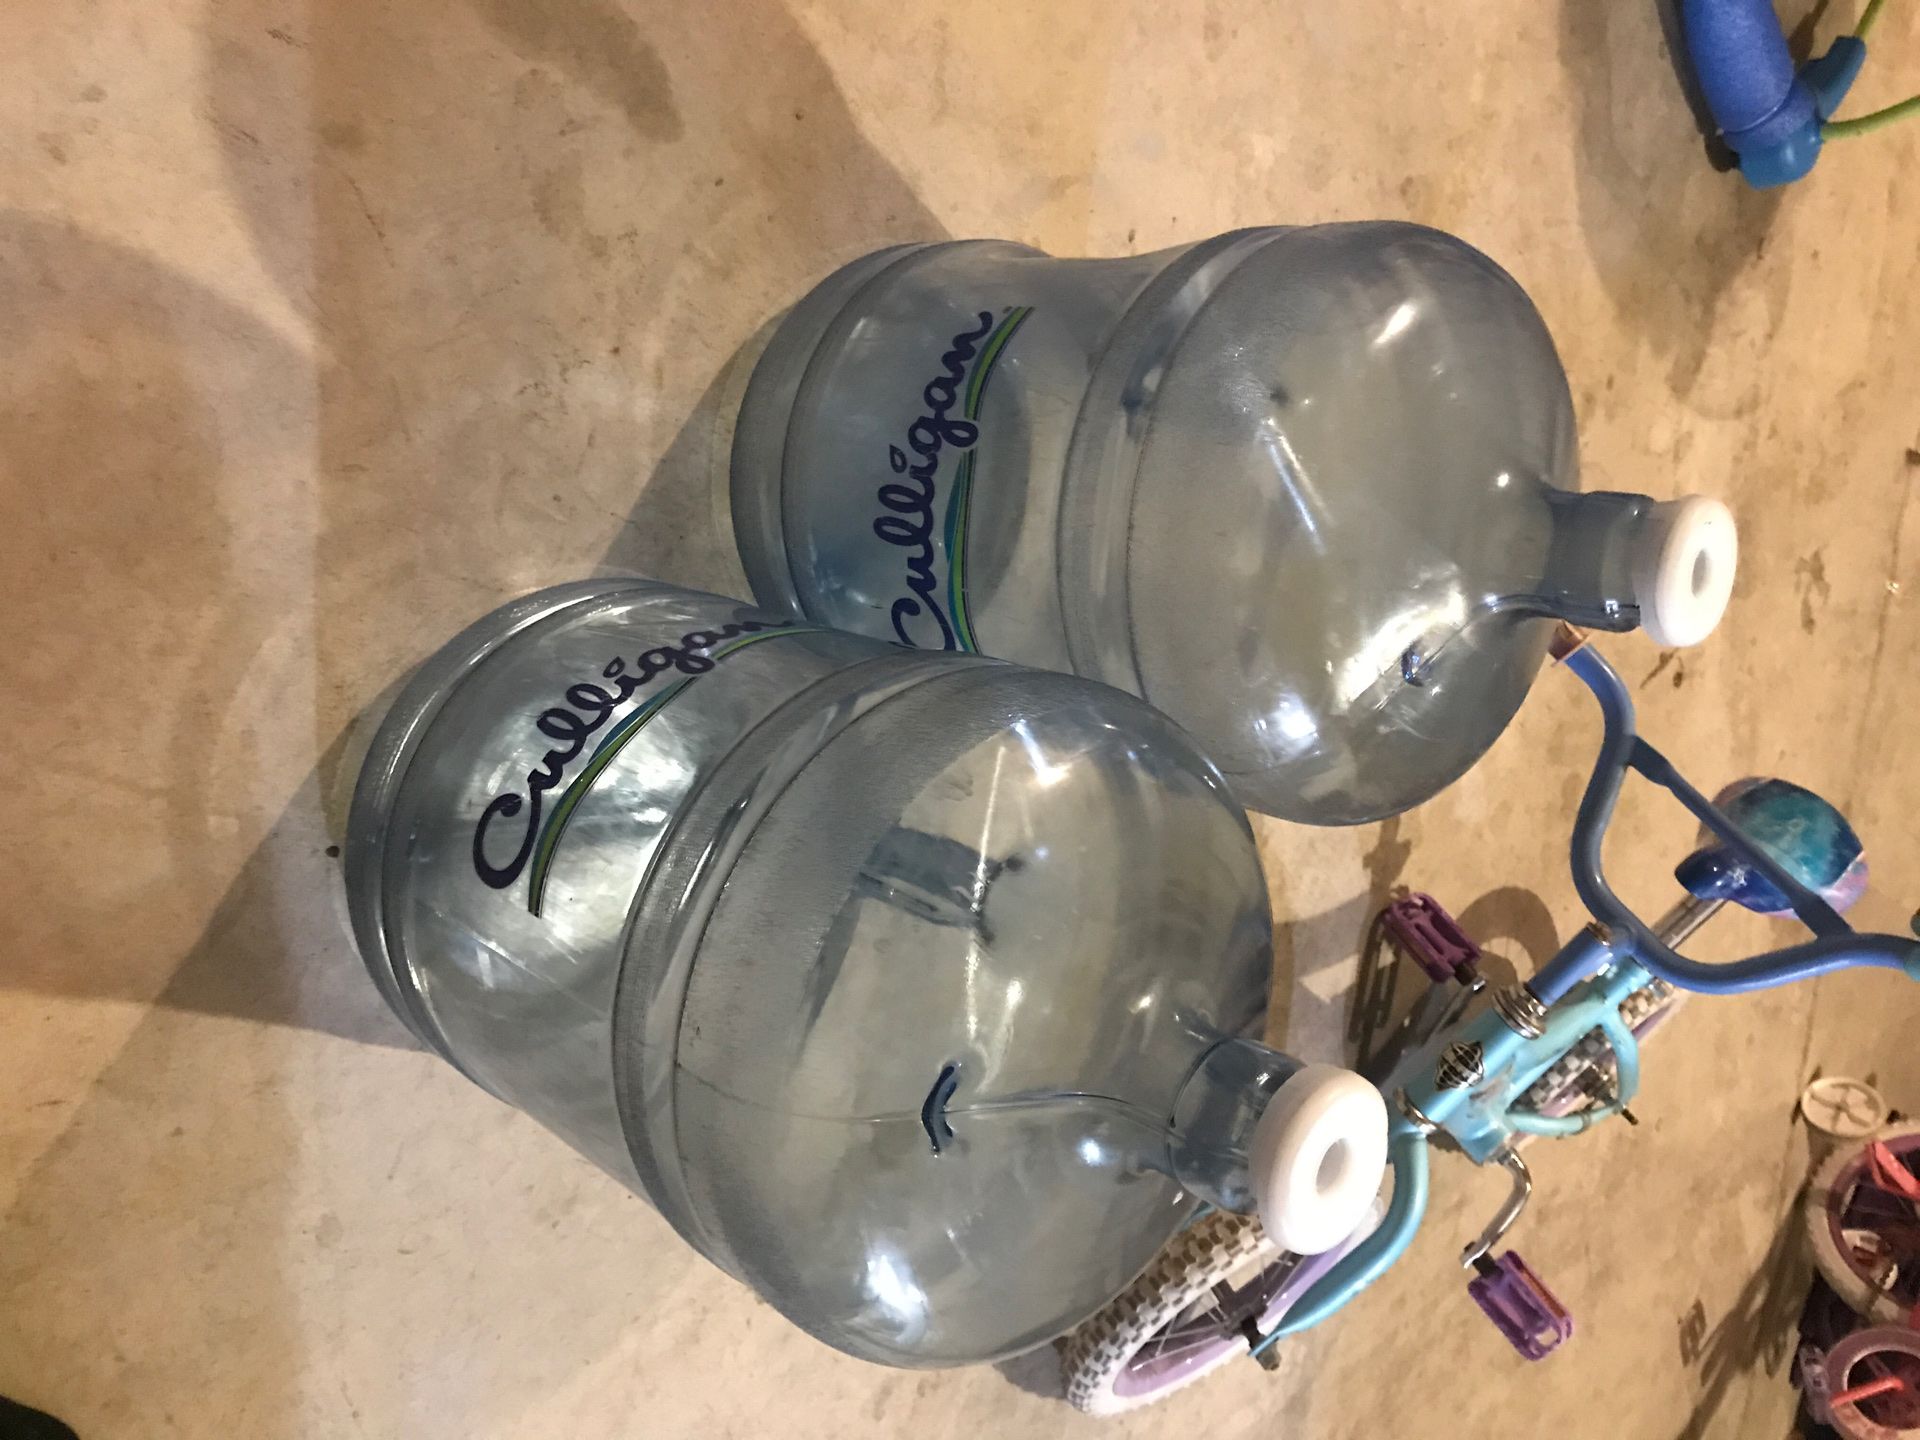 Two 5 gallon Culligan water jugs